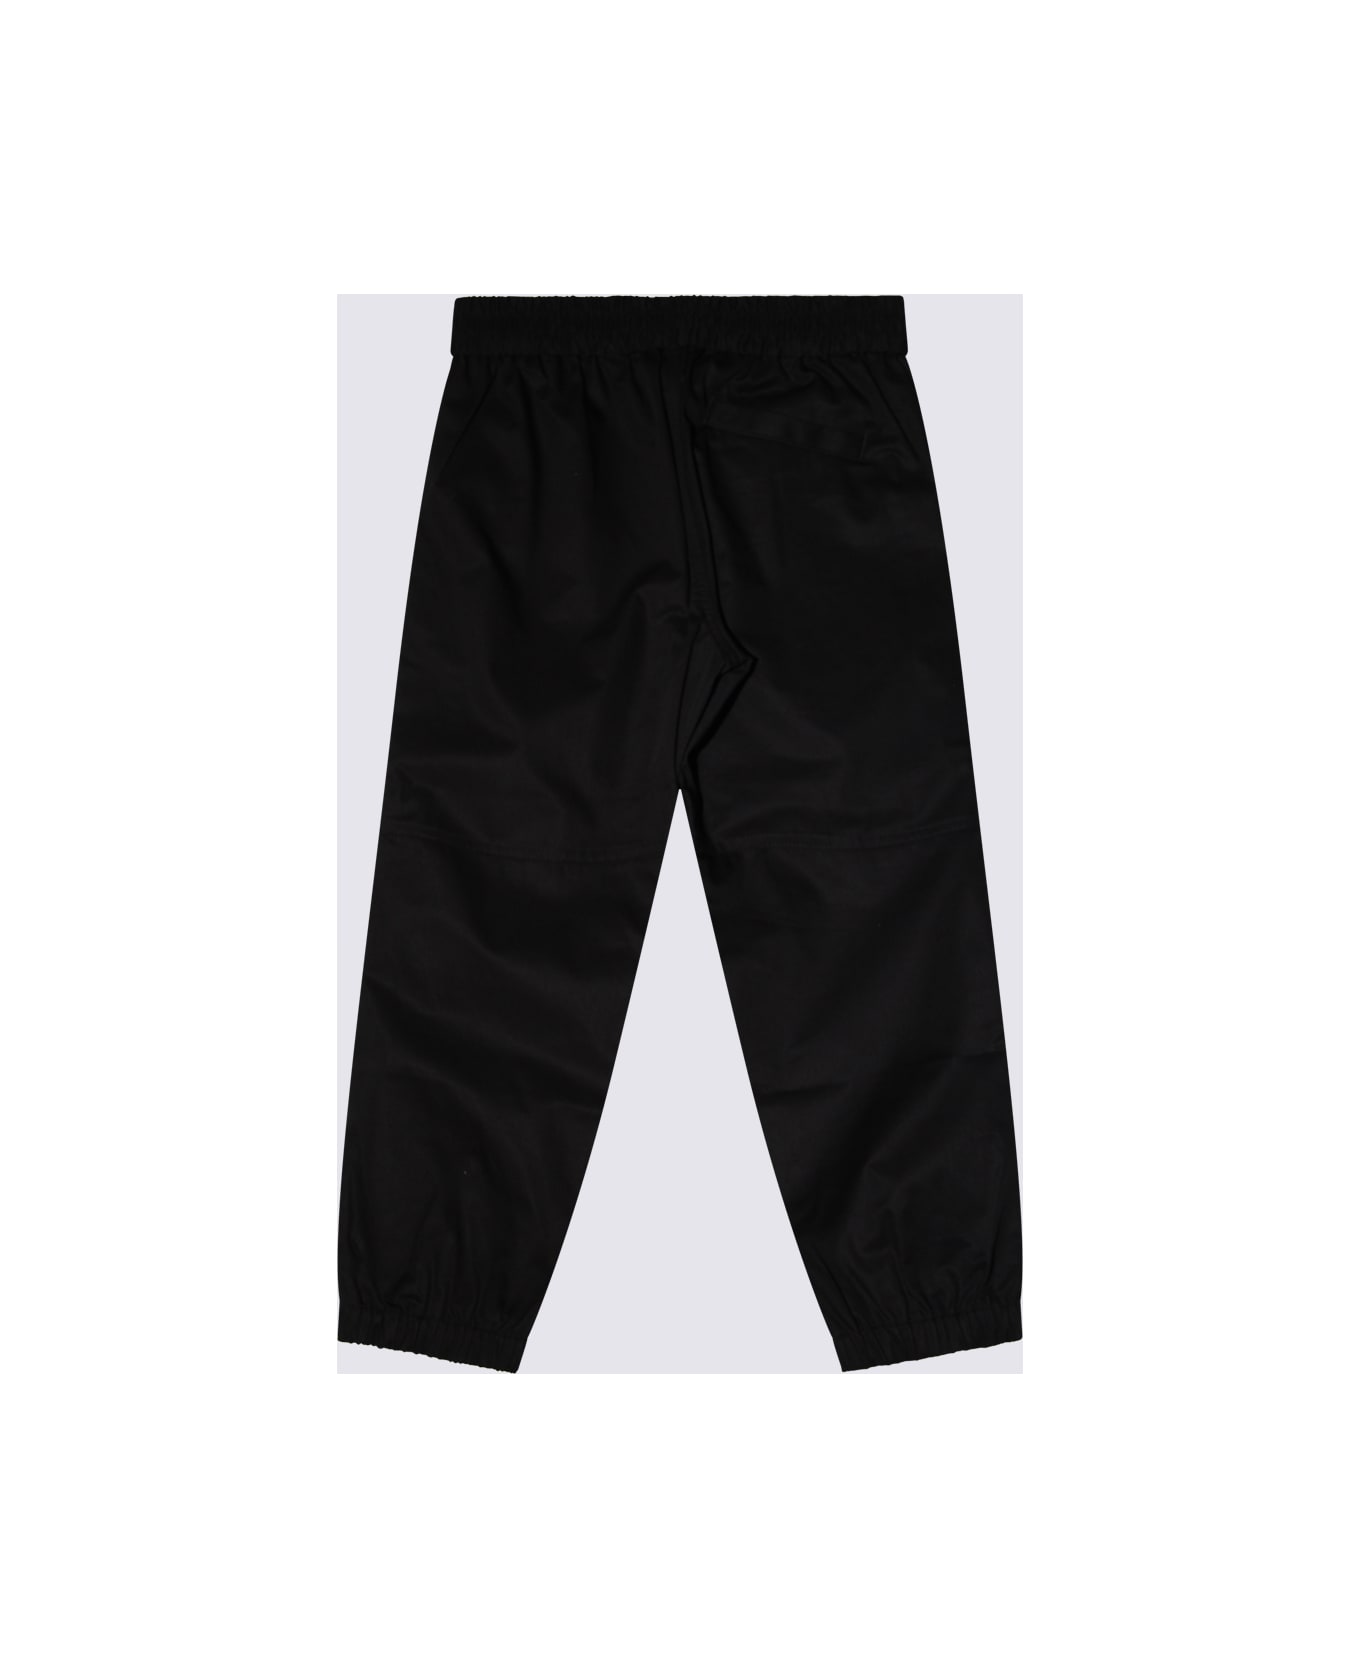 Burberry Black Cotton Pants - Black ボトムス